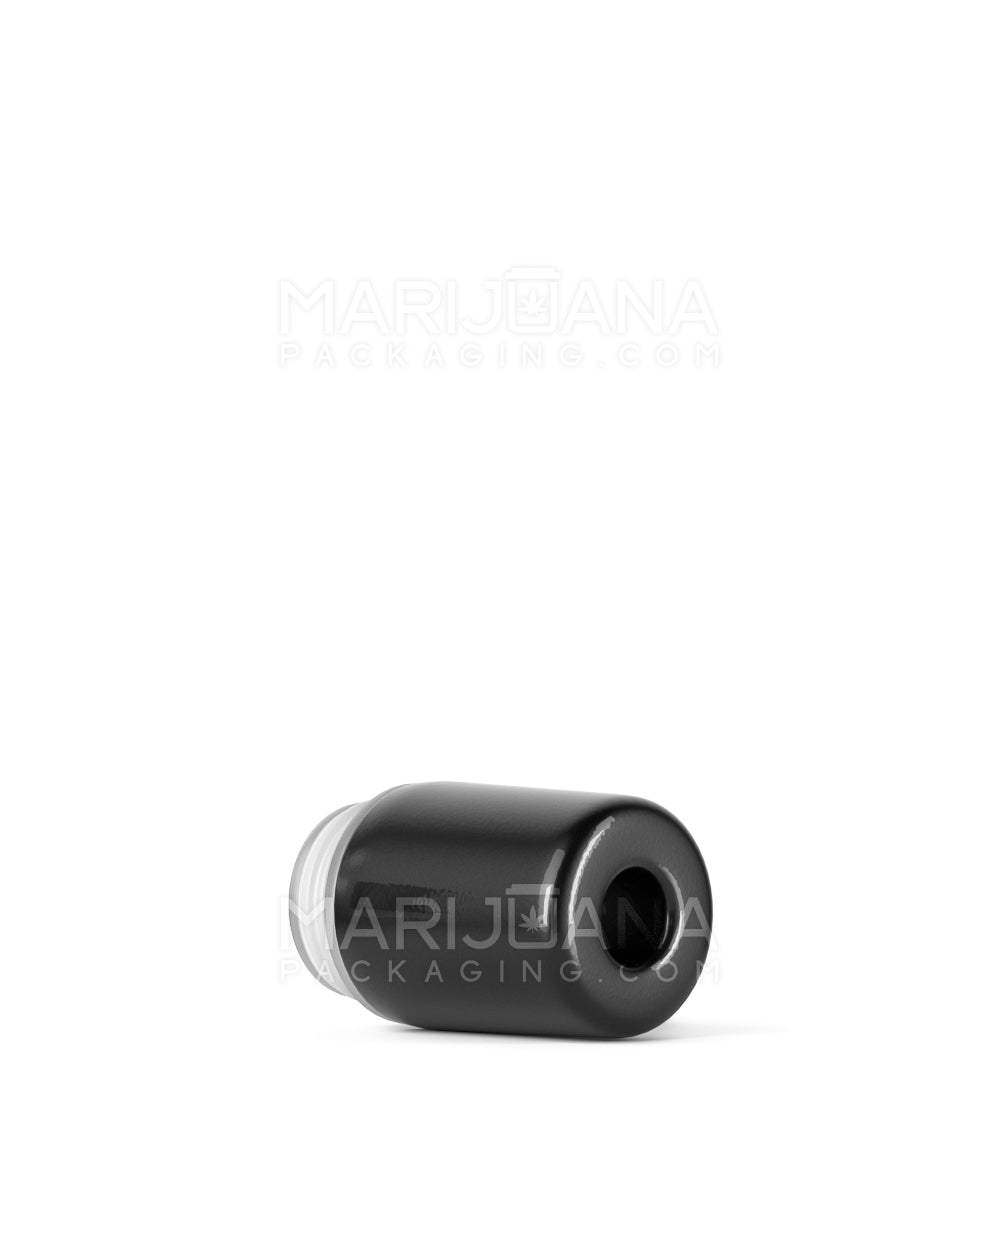 AVD | Barrel Vape Mouthpiece for Glass Cartridges | Black Ceramic - Eazy Press - 600 Count - 5